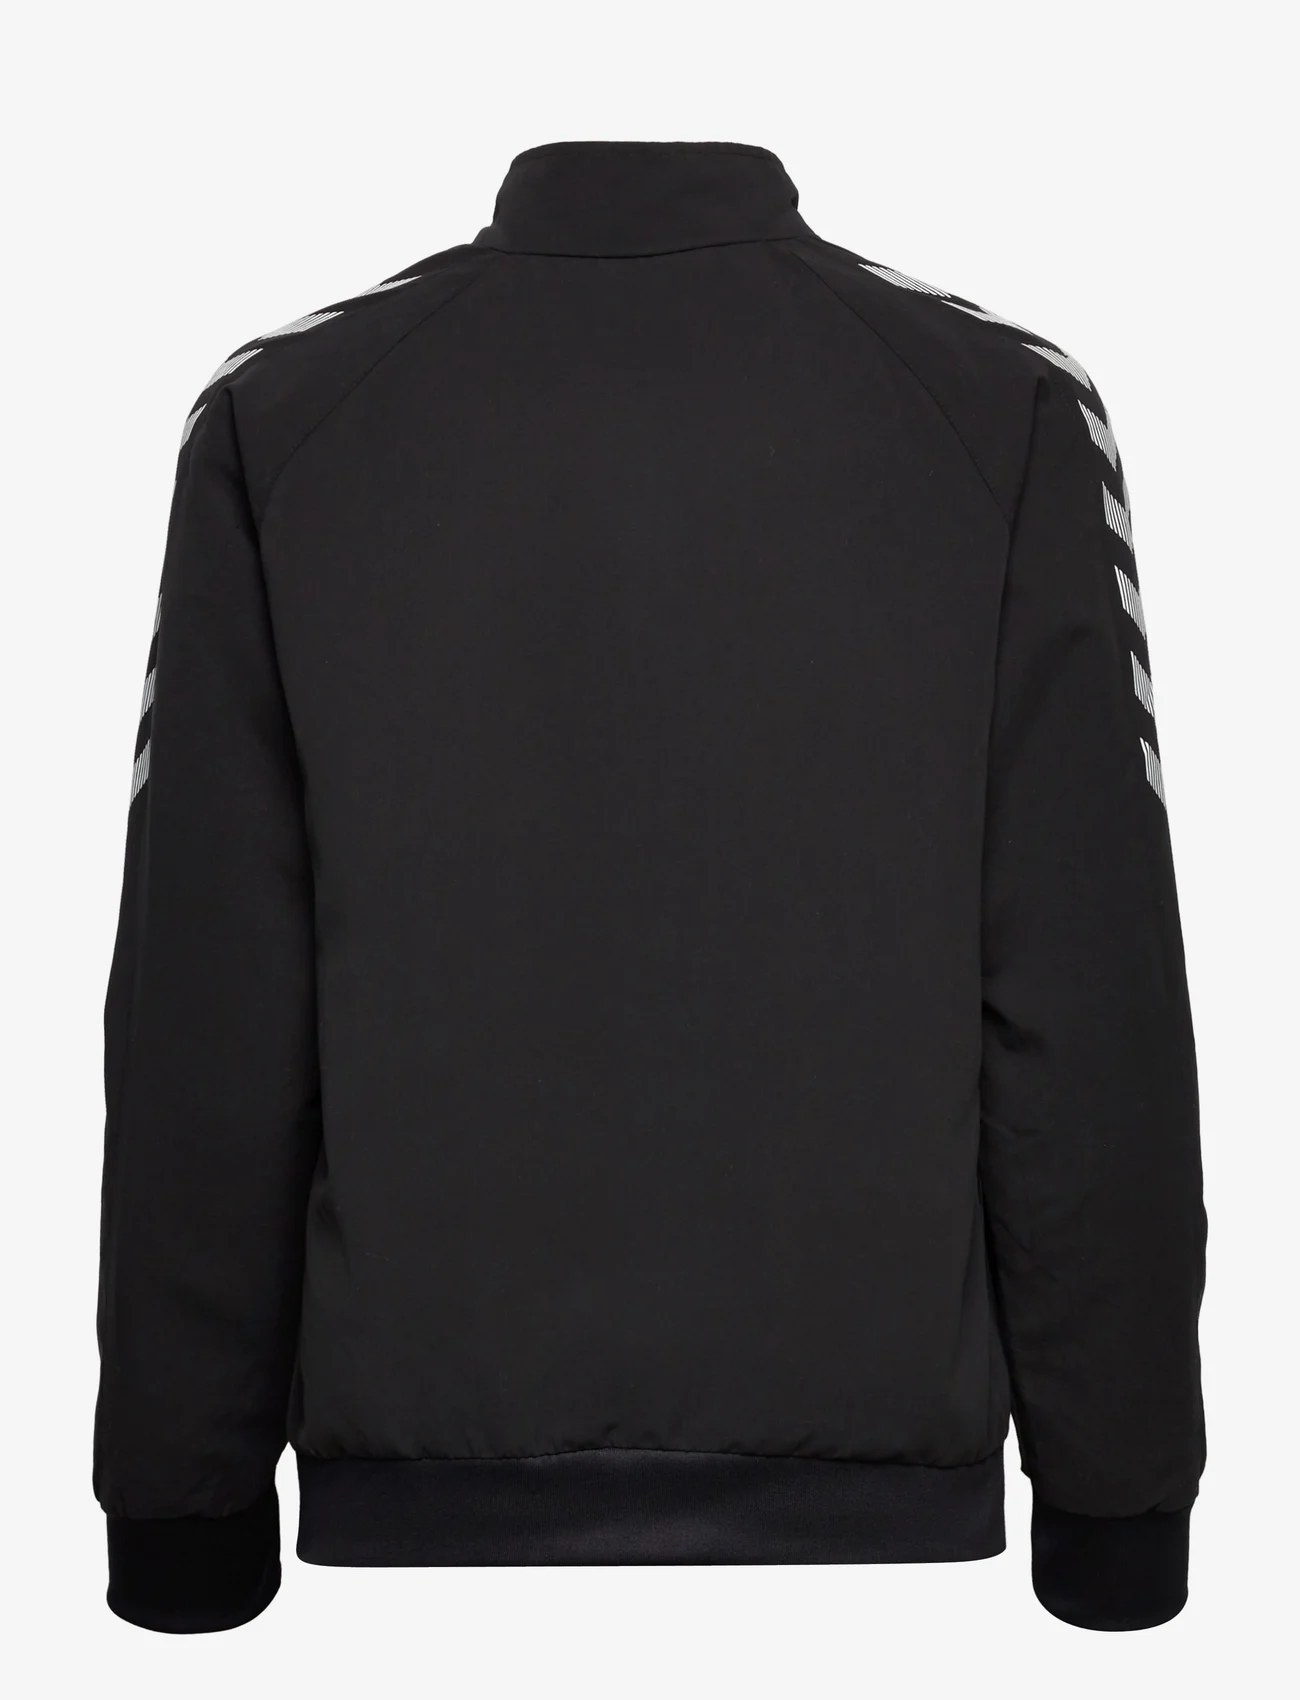 Hummel - hmlGG12 TRACK JACKET WOMAN - sports jackets - black - 1